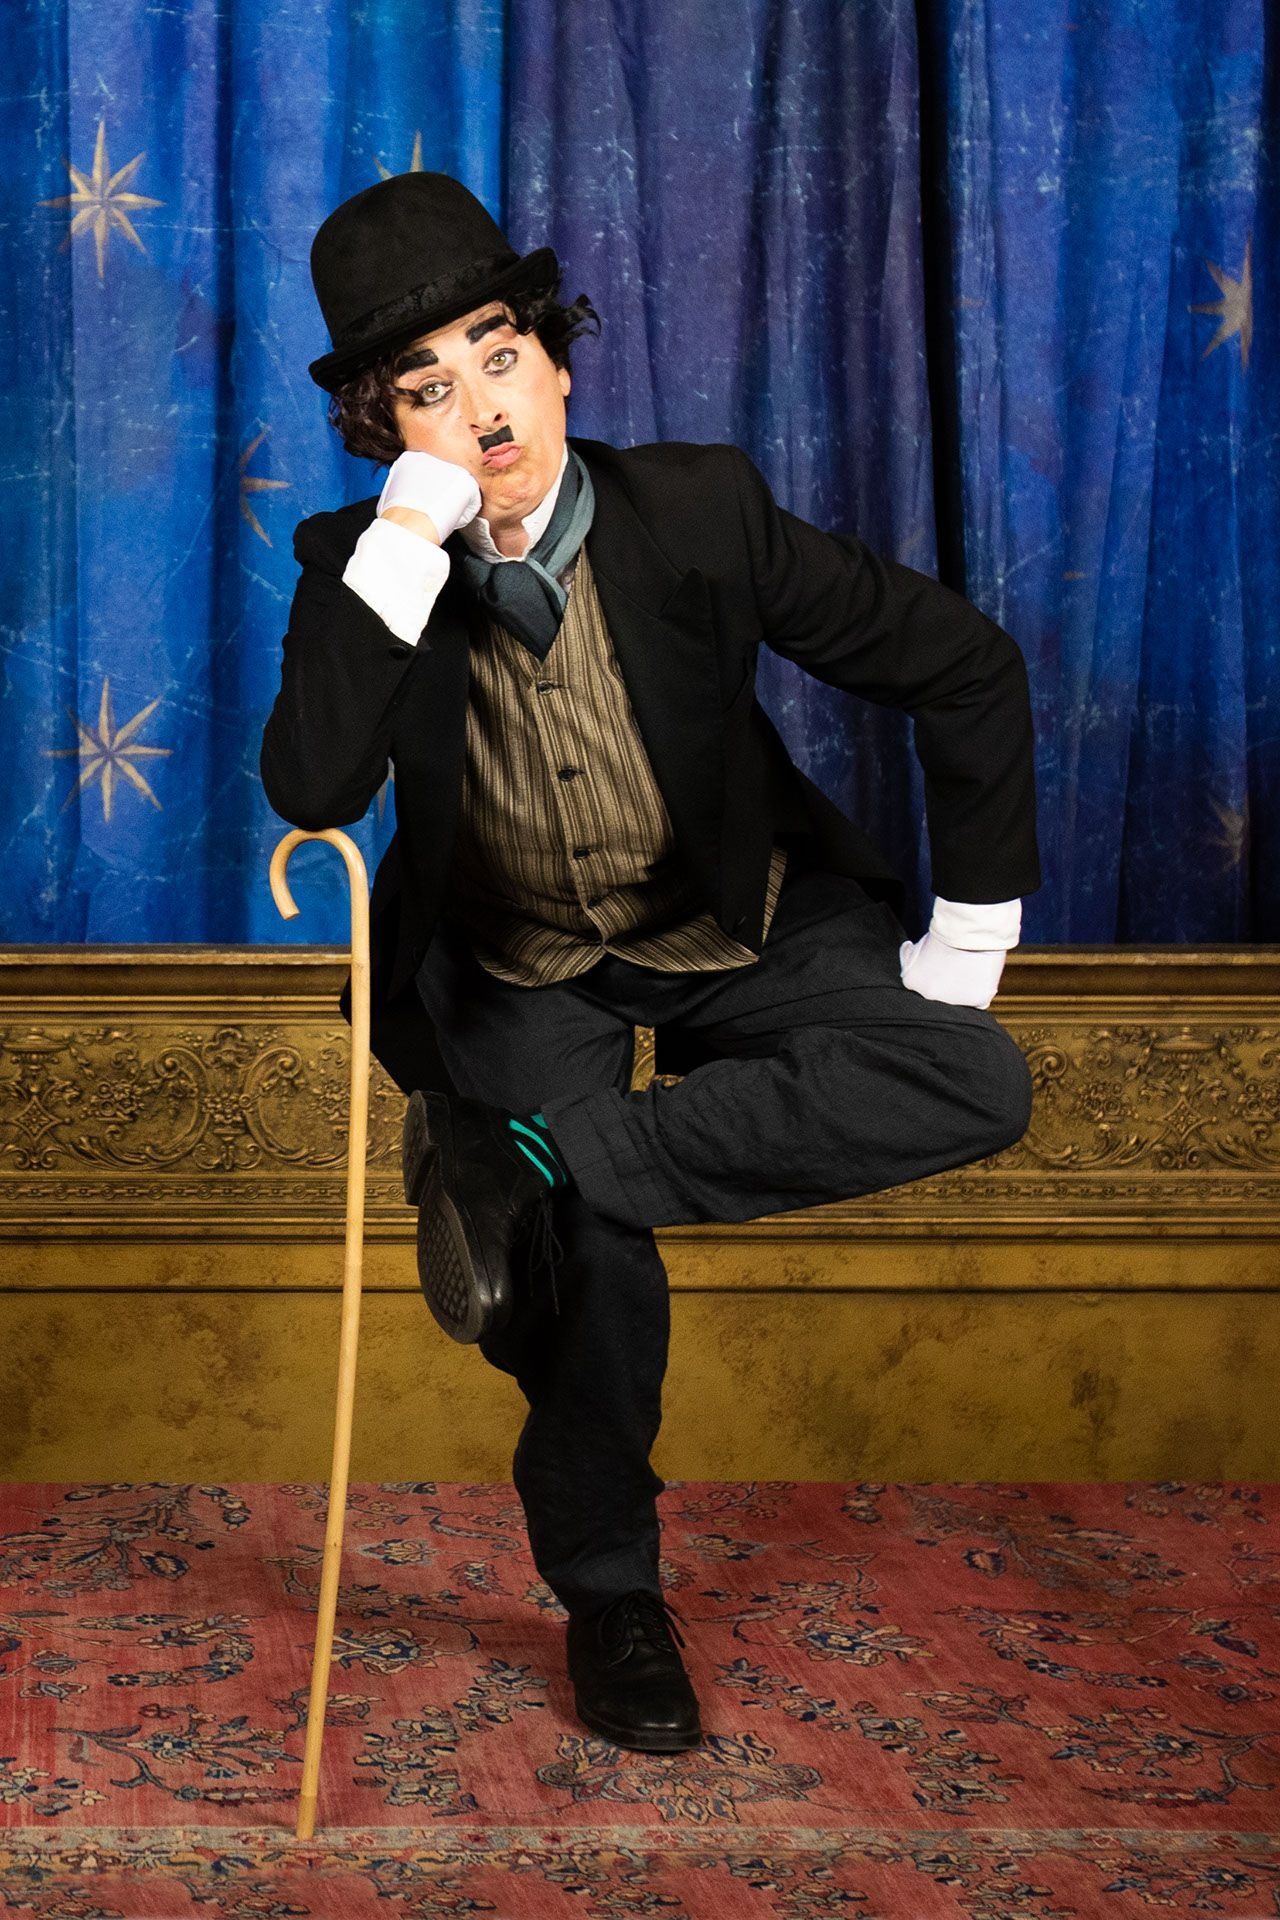 Charlie Chaplin Solo Act 